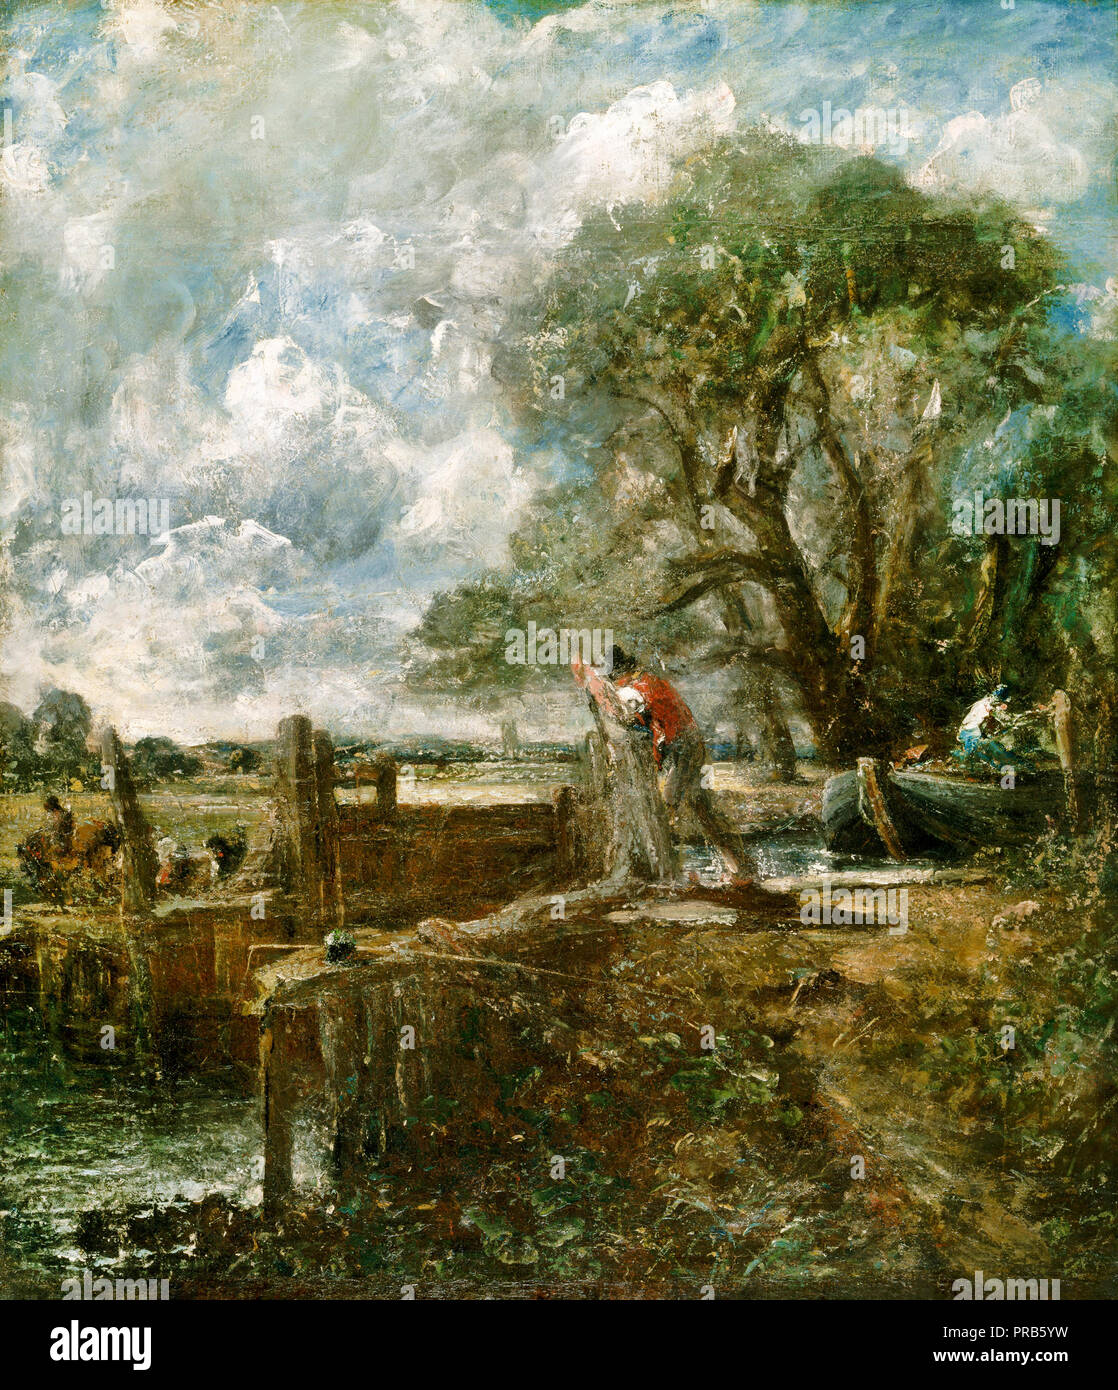 John Constable, Skizze für ein Boot, ein Lock'. Circa 1822-1824 Öl auf Leinwand, Philadelphia Museum der Kunst, Pennsylvania, USA. Stockfoto